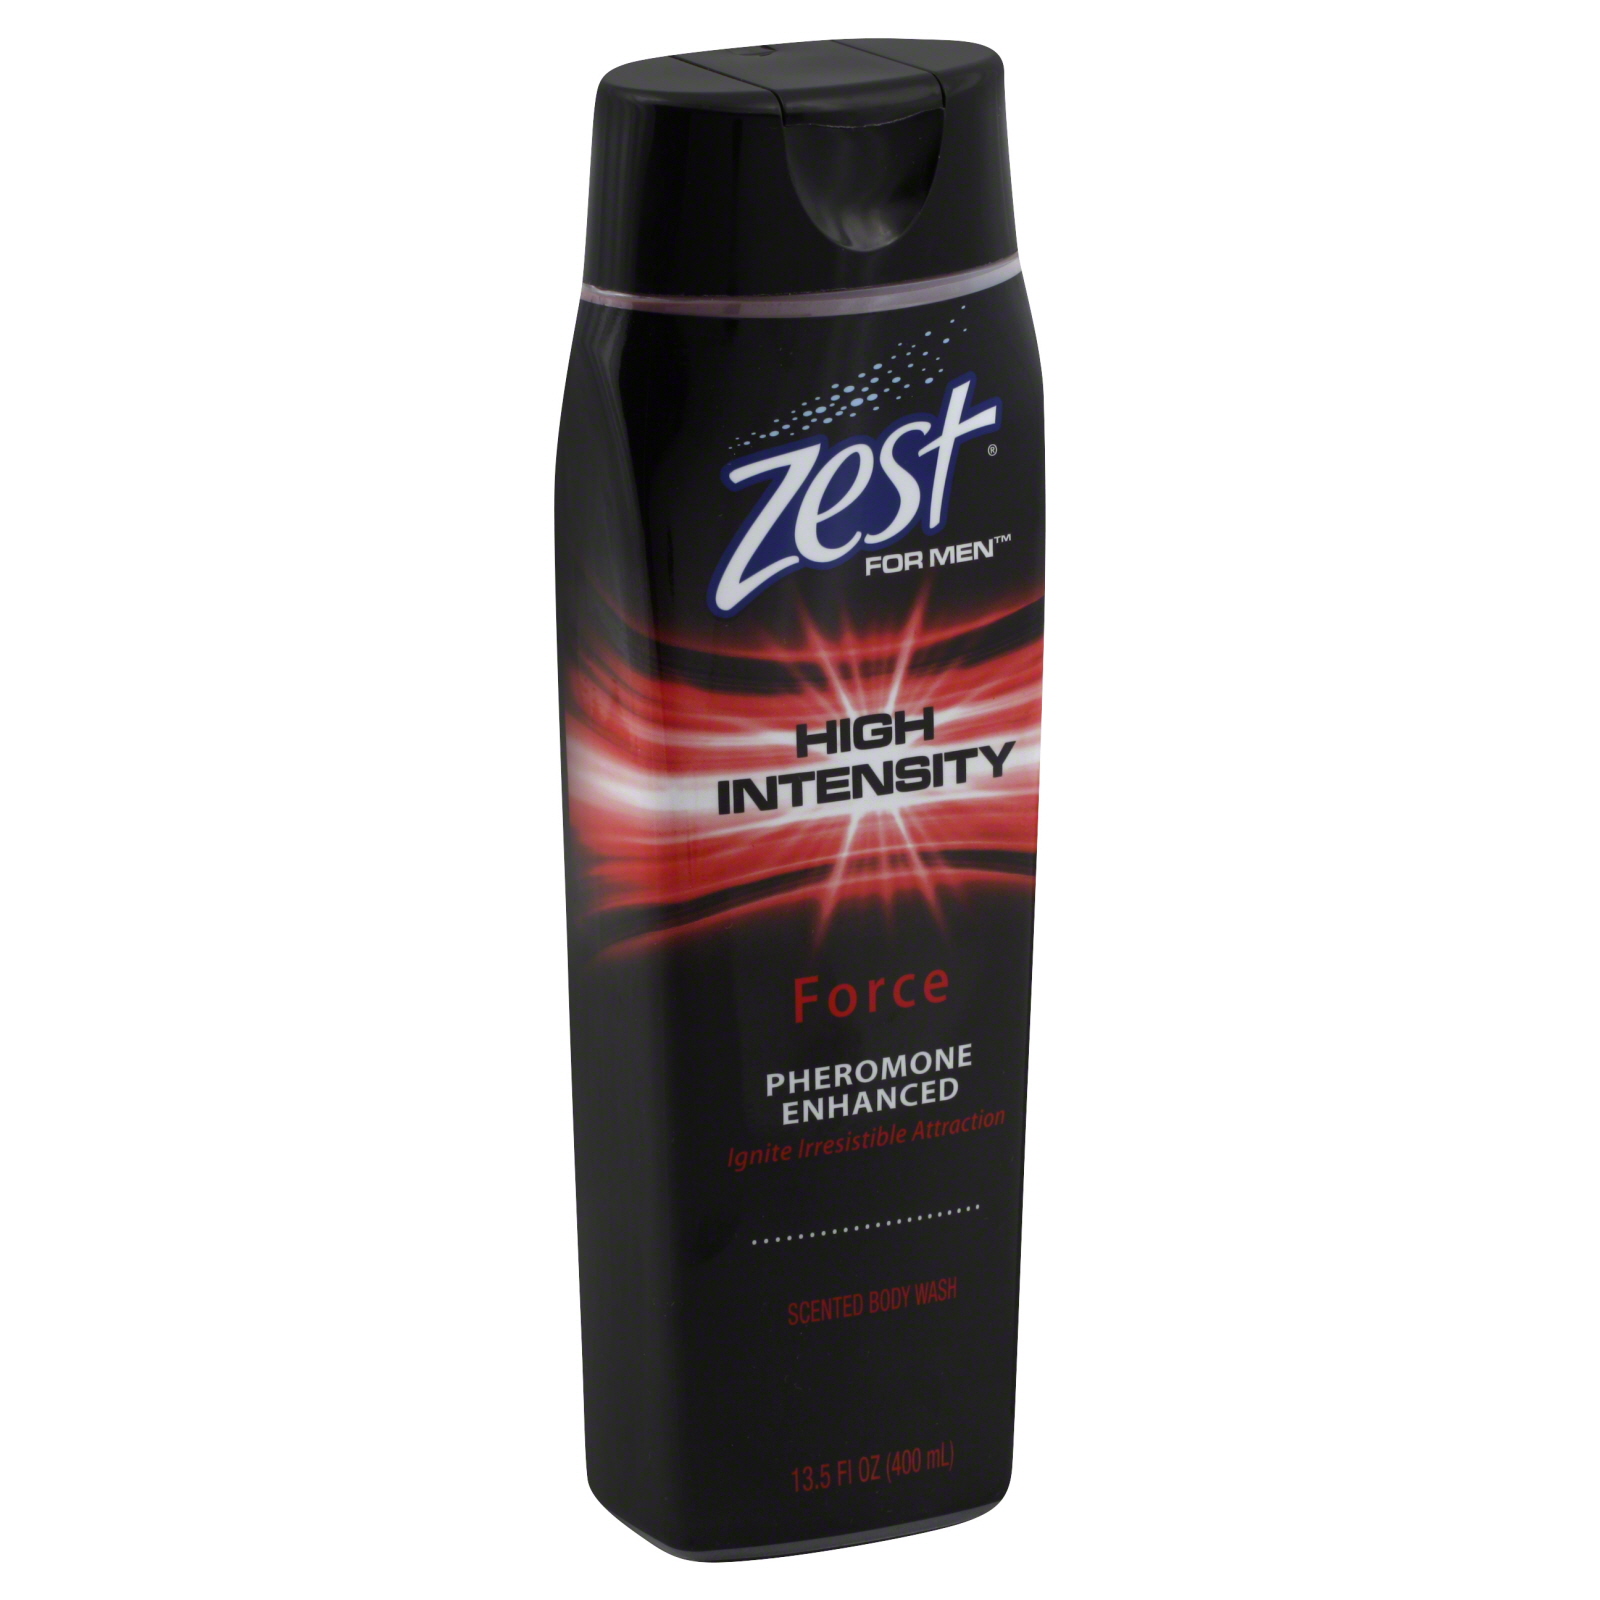 Zest Scented Body Wash, High Intensity, Force, Pheromone Enhanced, 13.5 fl oz (400 ml)